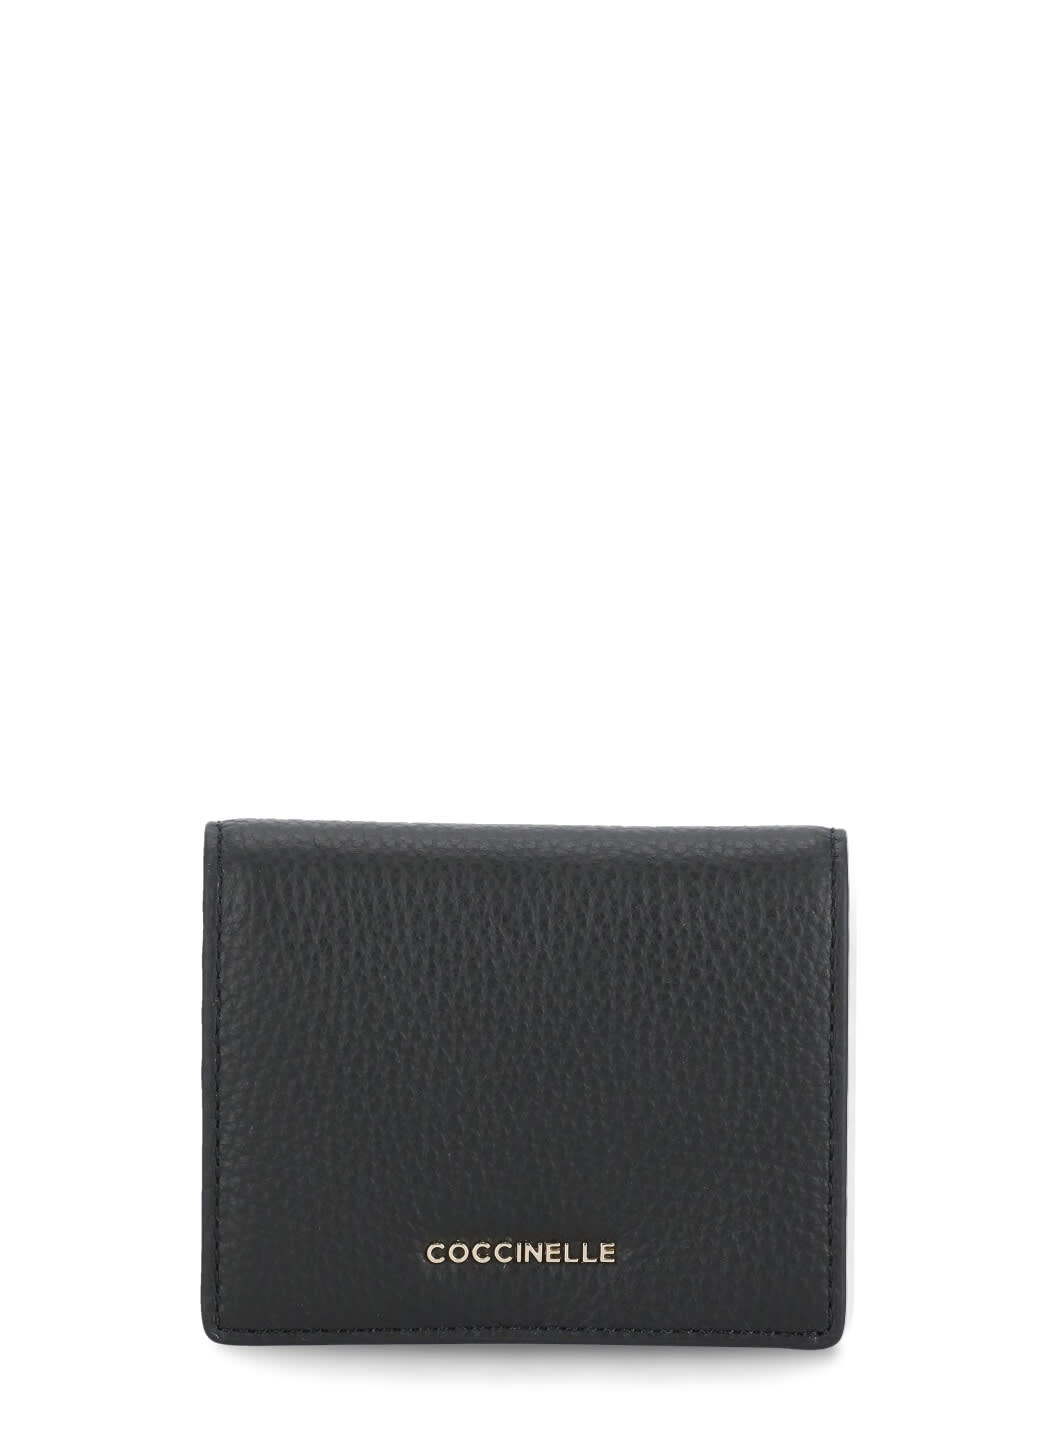 Coccinelle Metallic Soft Wallet In Black